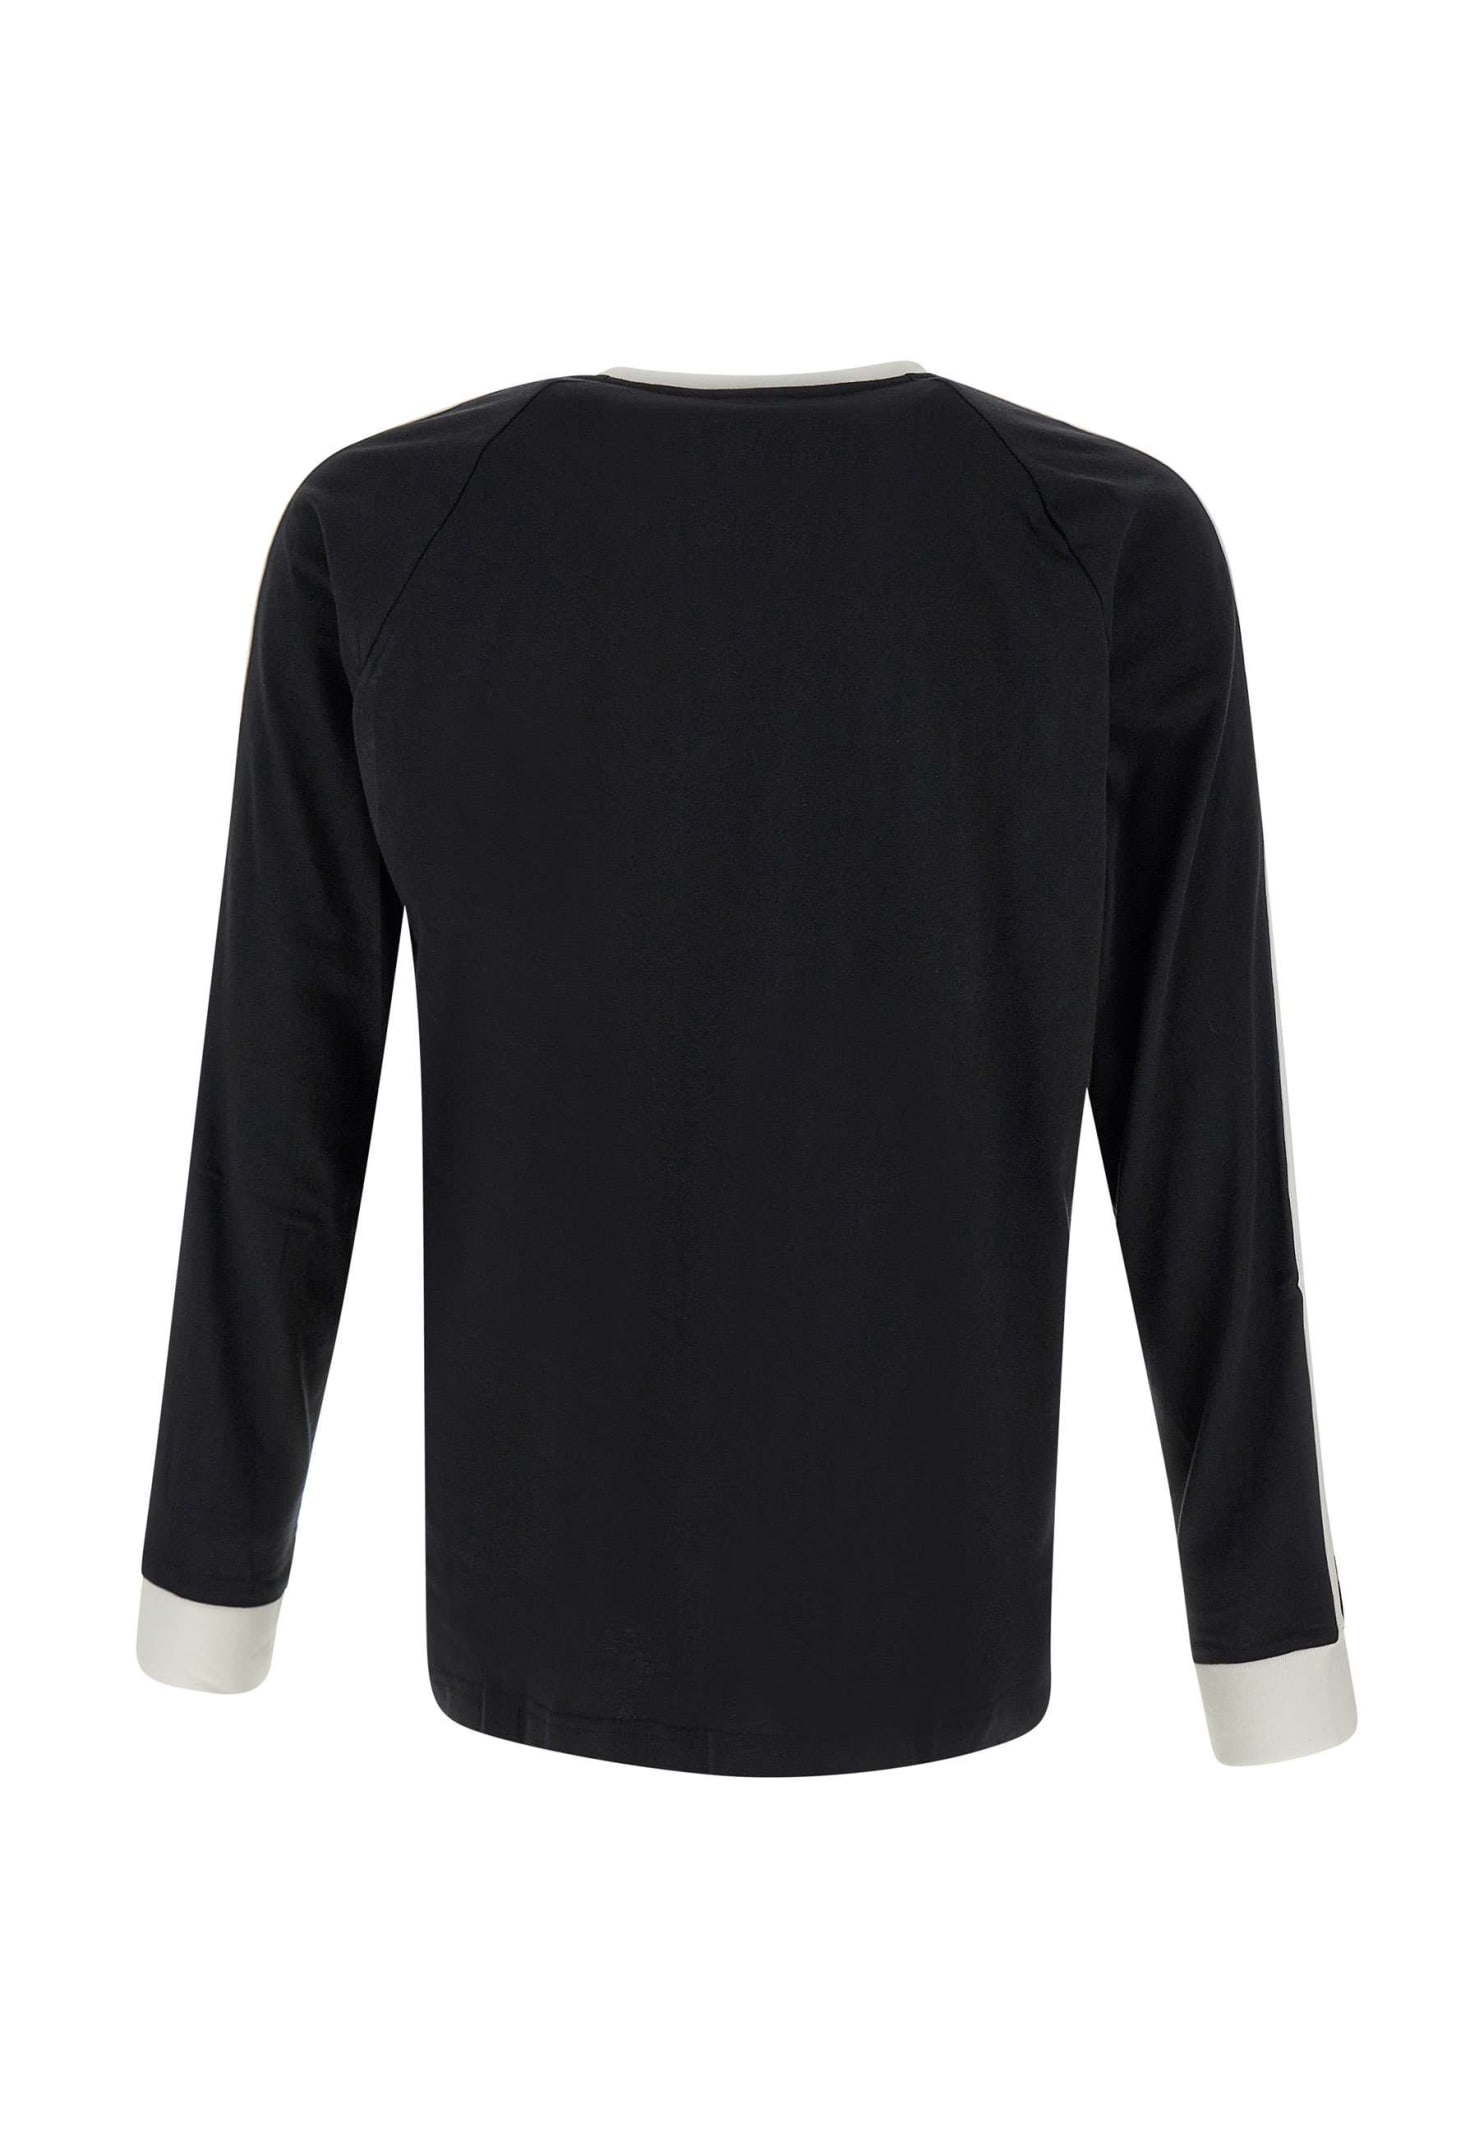 Shop Adidas Originals Flames Cotton Sweater In Black